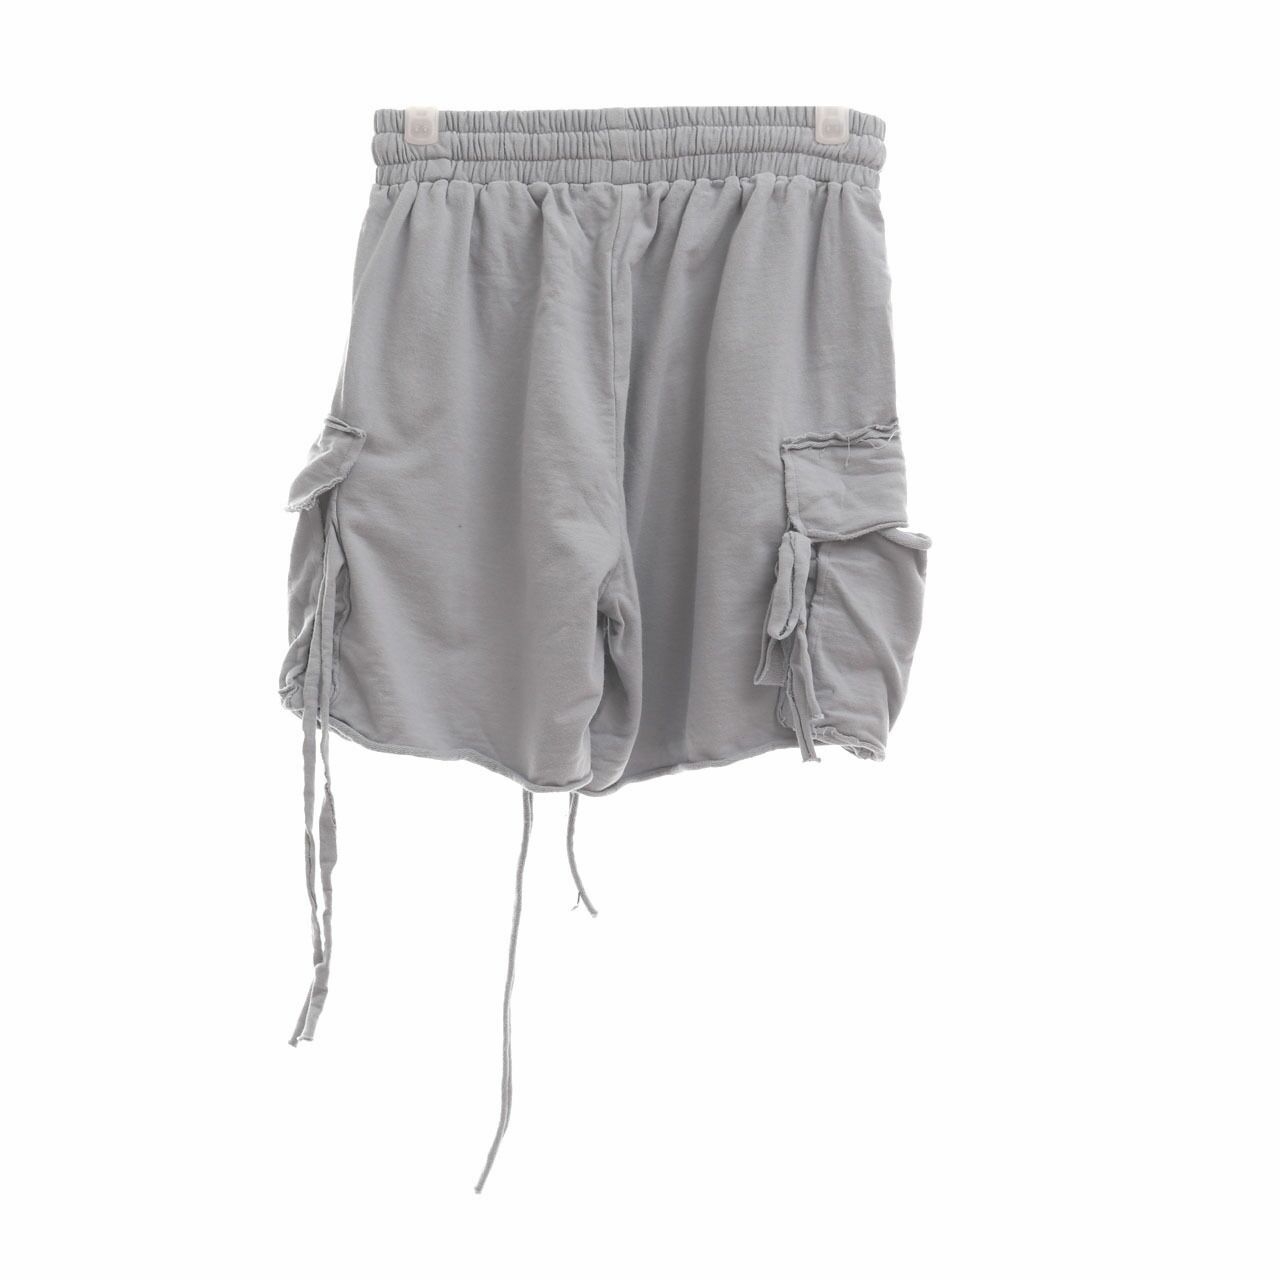 Connive Grey Short Pants